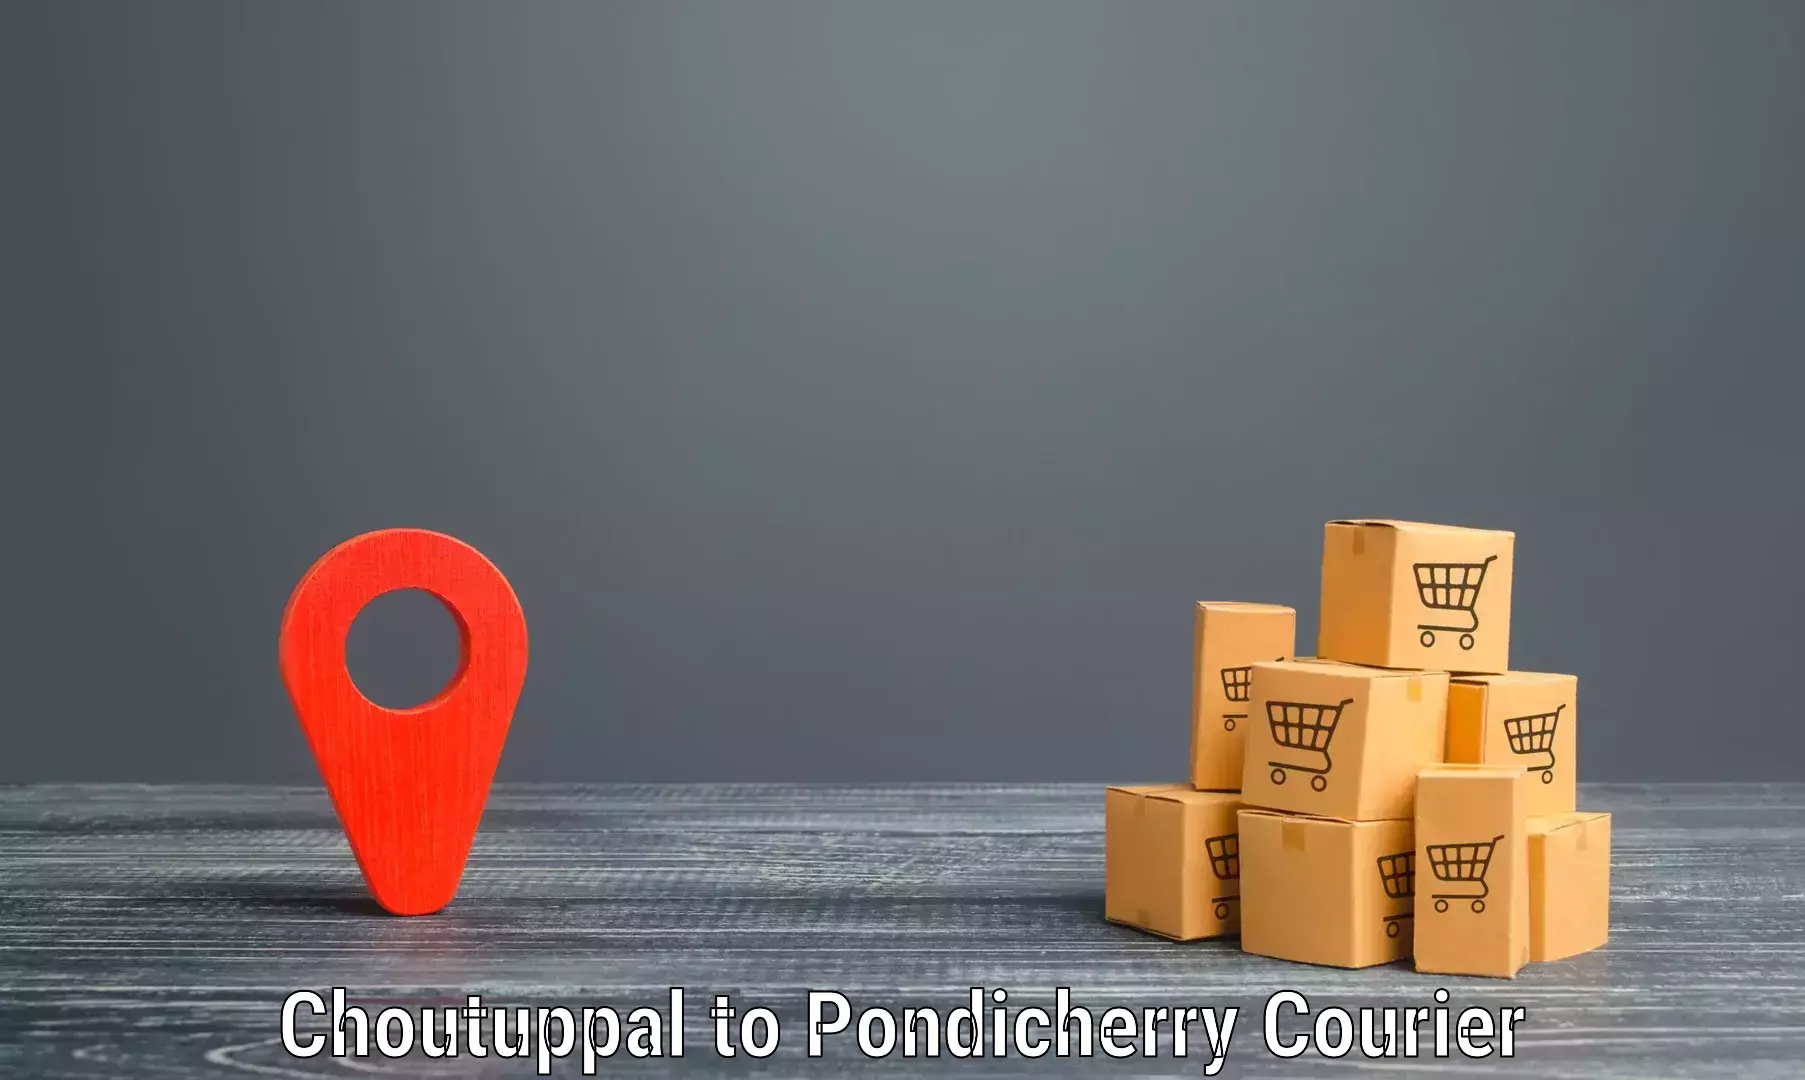 Digital courier platforms Choutuppal to Karaikal